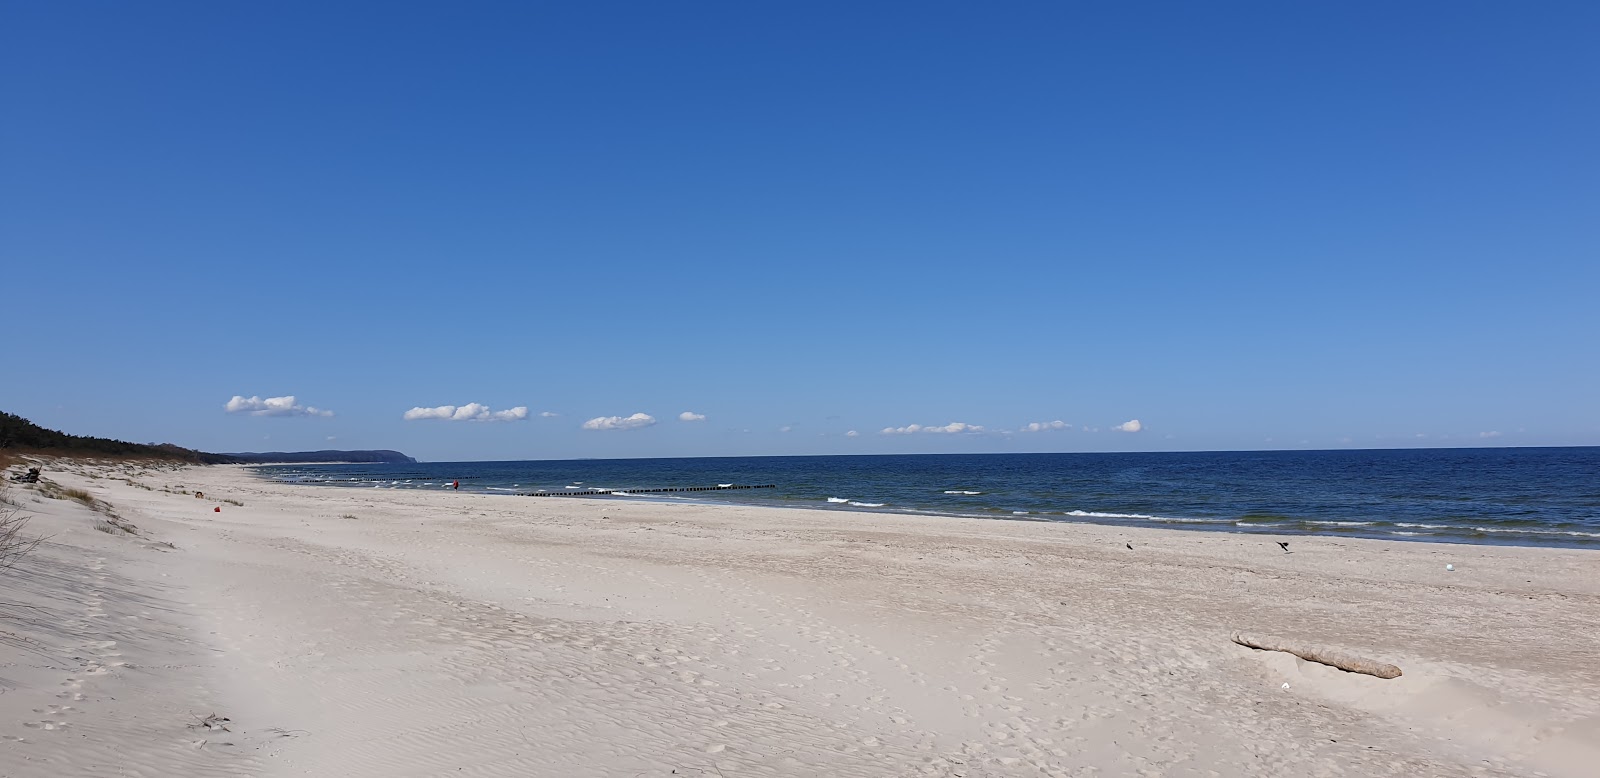 Photo of Dziwnow Beach with long straight shore